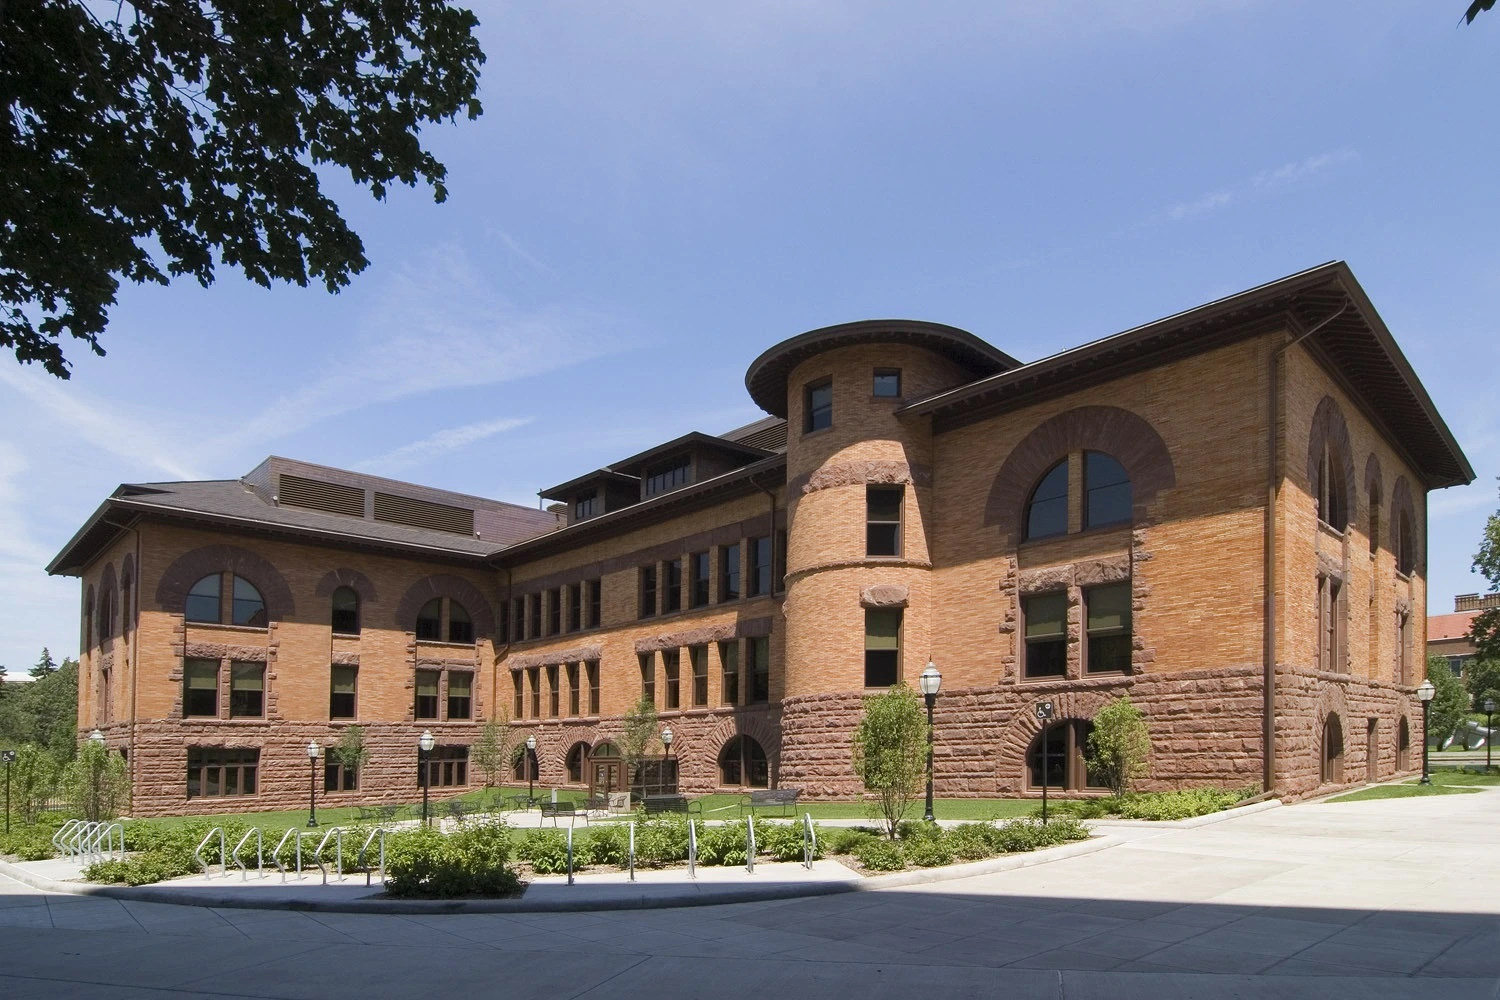 University of Minnesota – Nicholson Hall